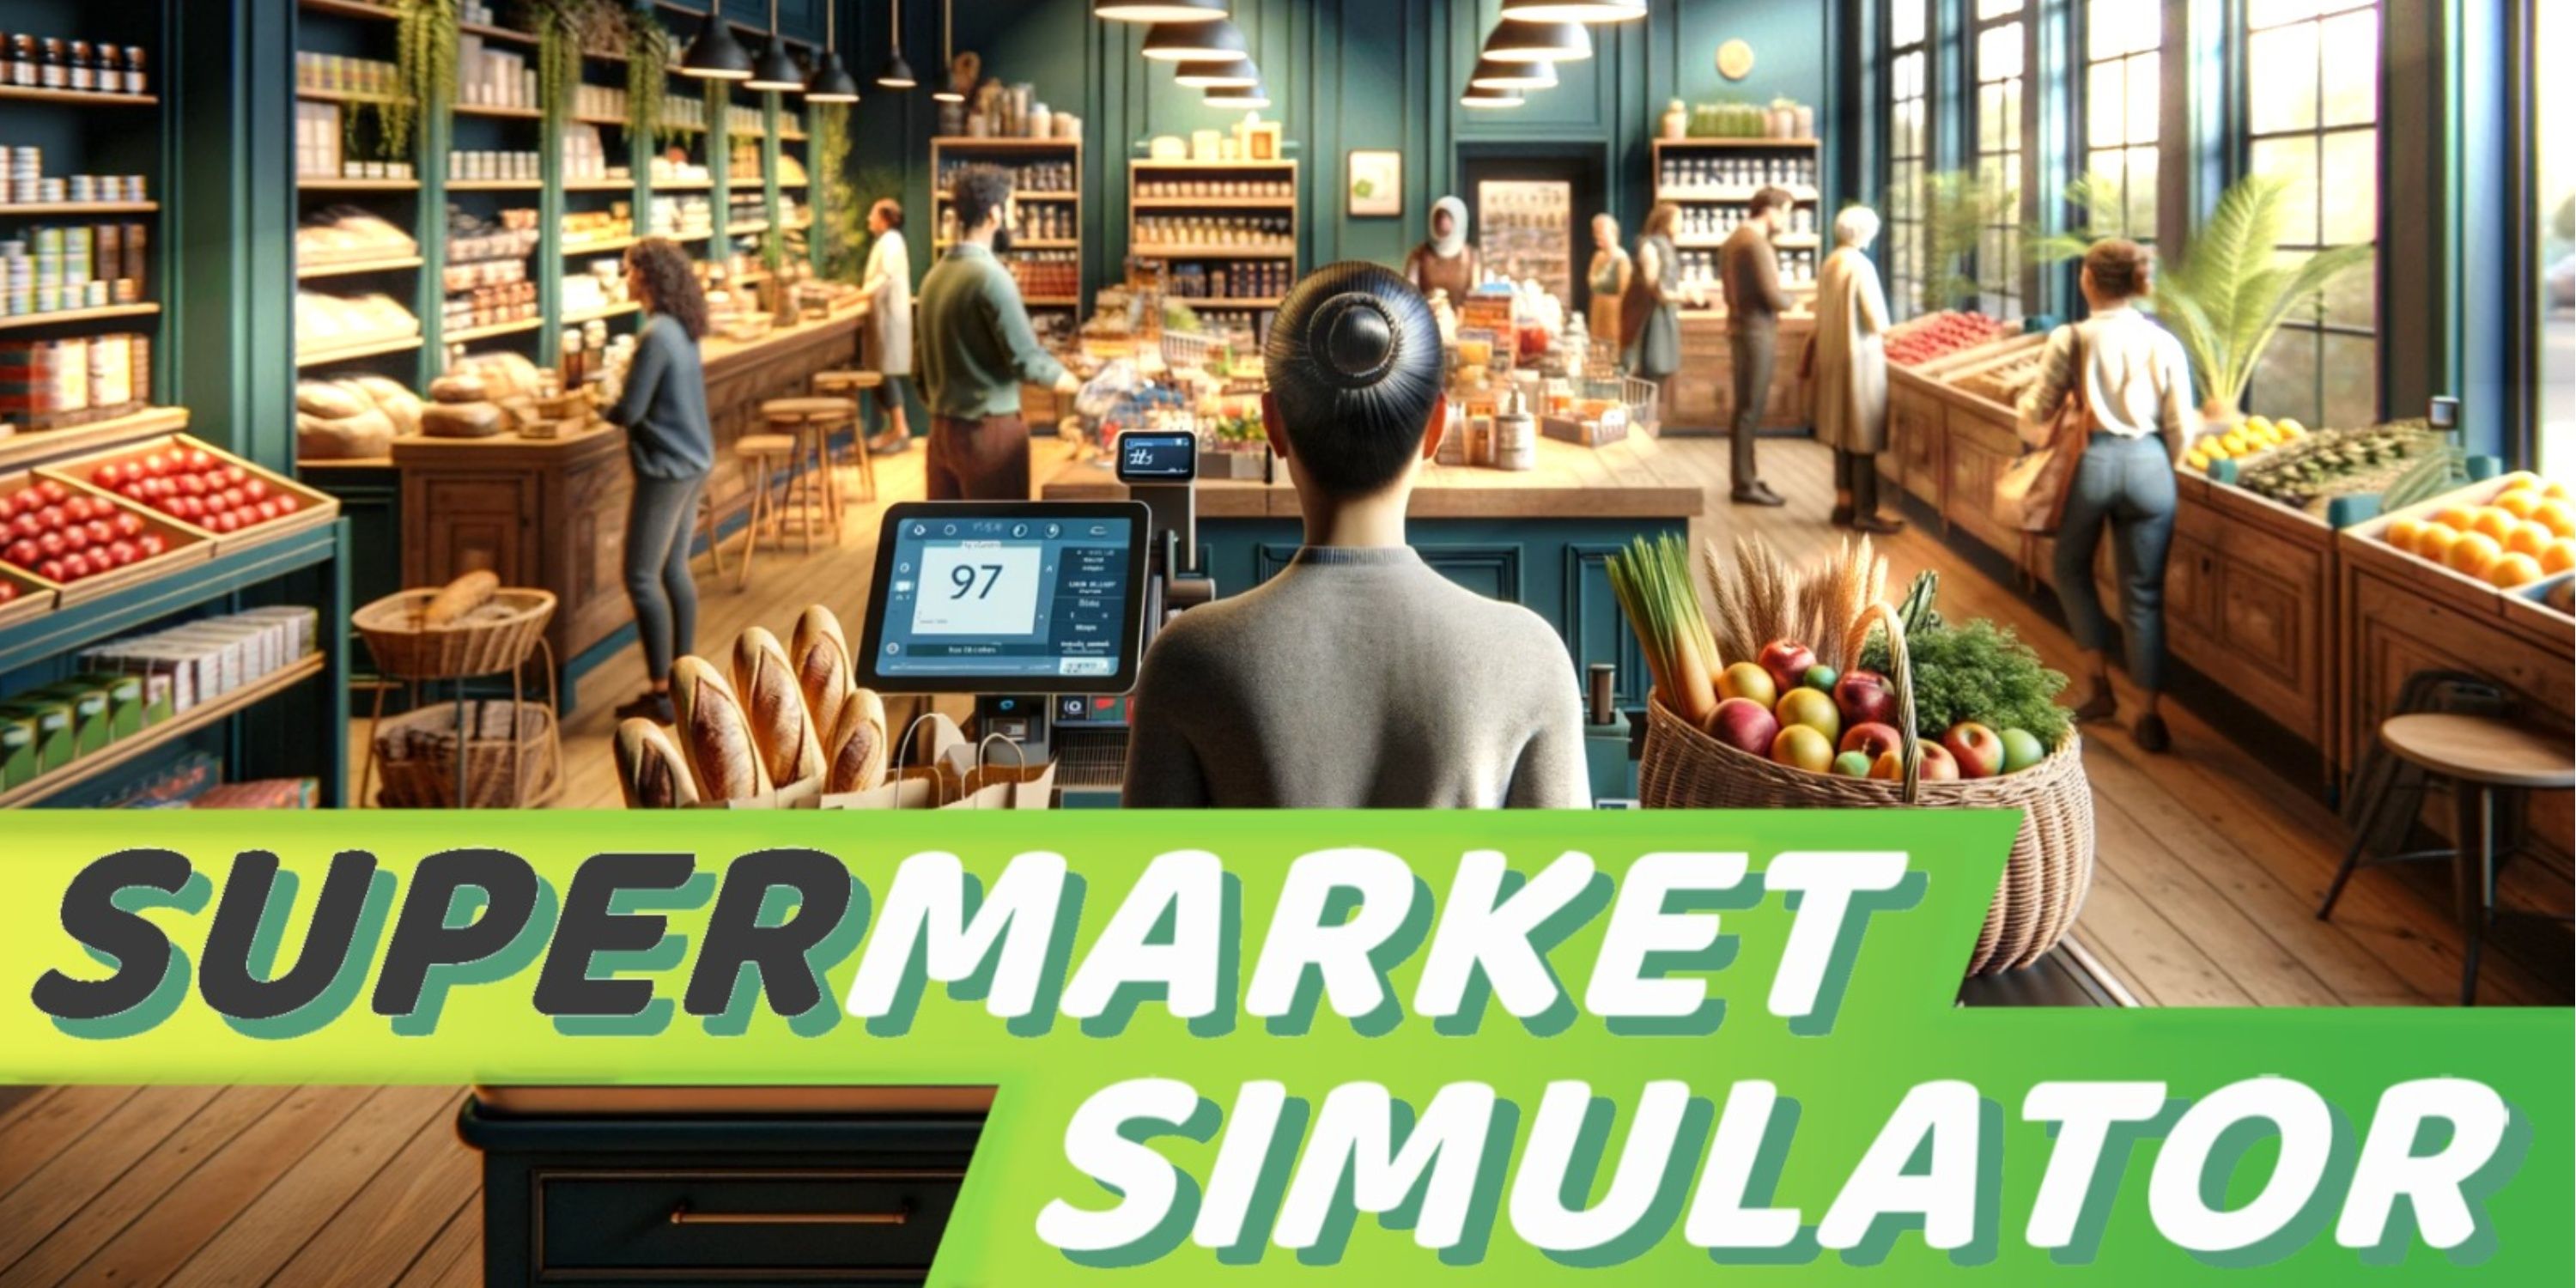 Supermarket Simulator Feature Image